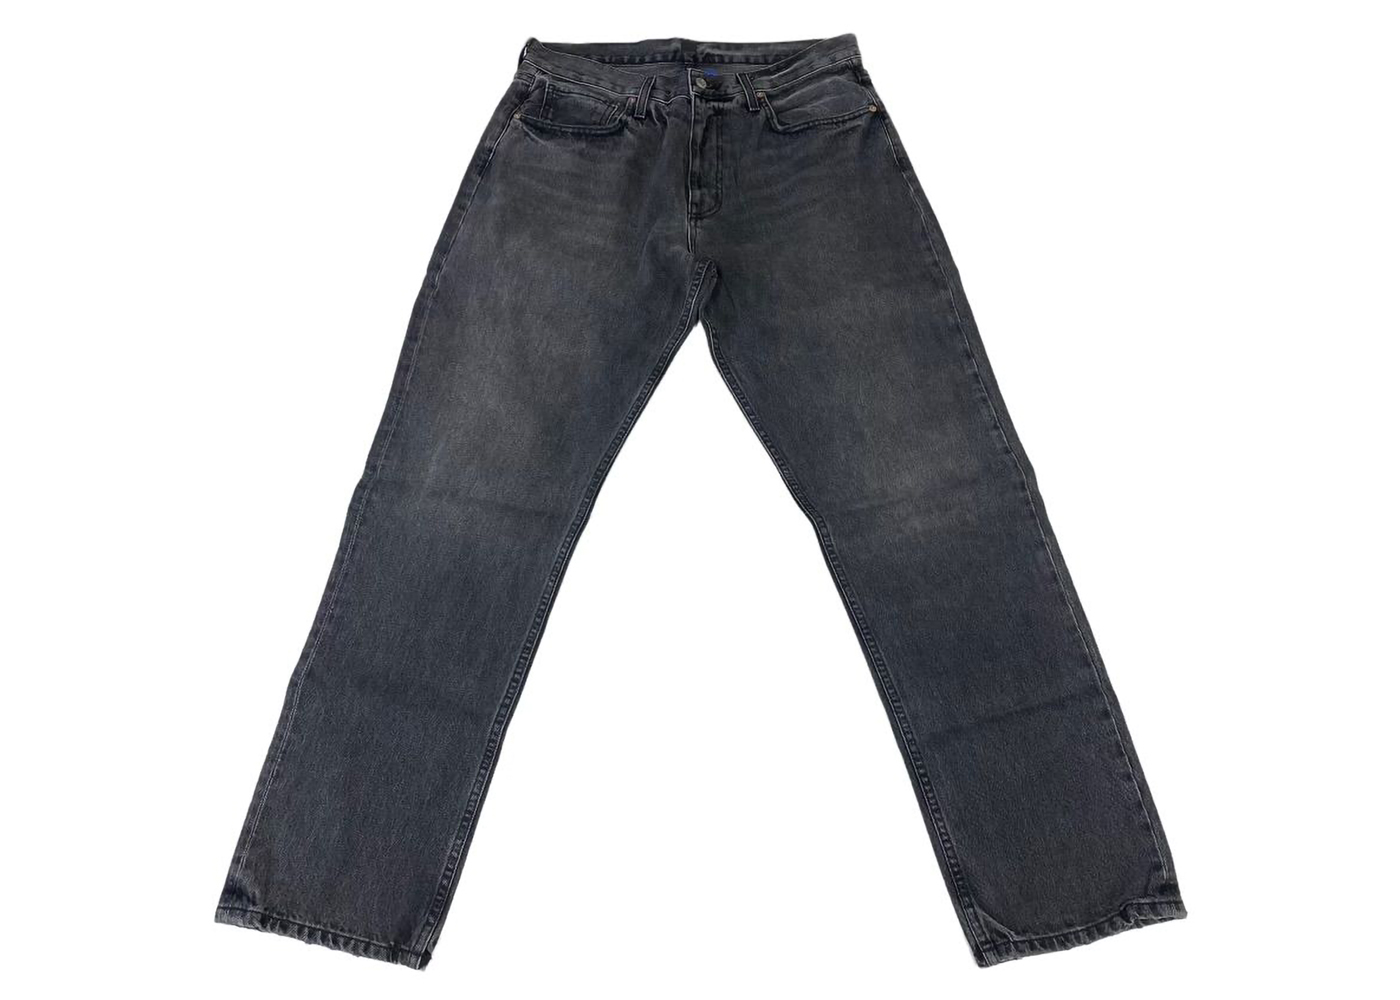 Yeezy Gap Engineered by Balenciaga 5 Pocket Denim Pants Grey Wash